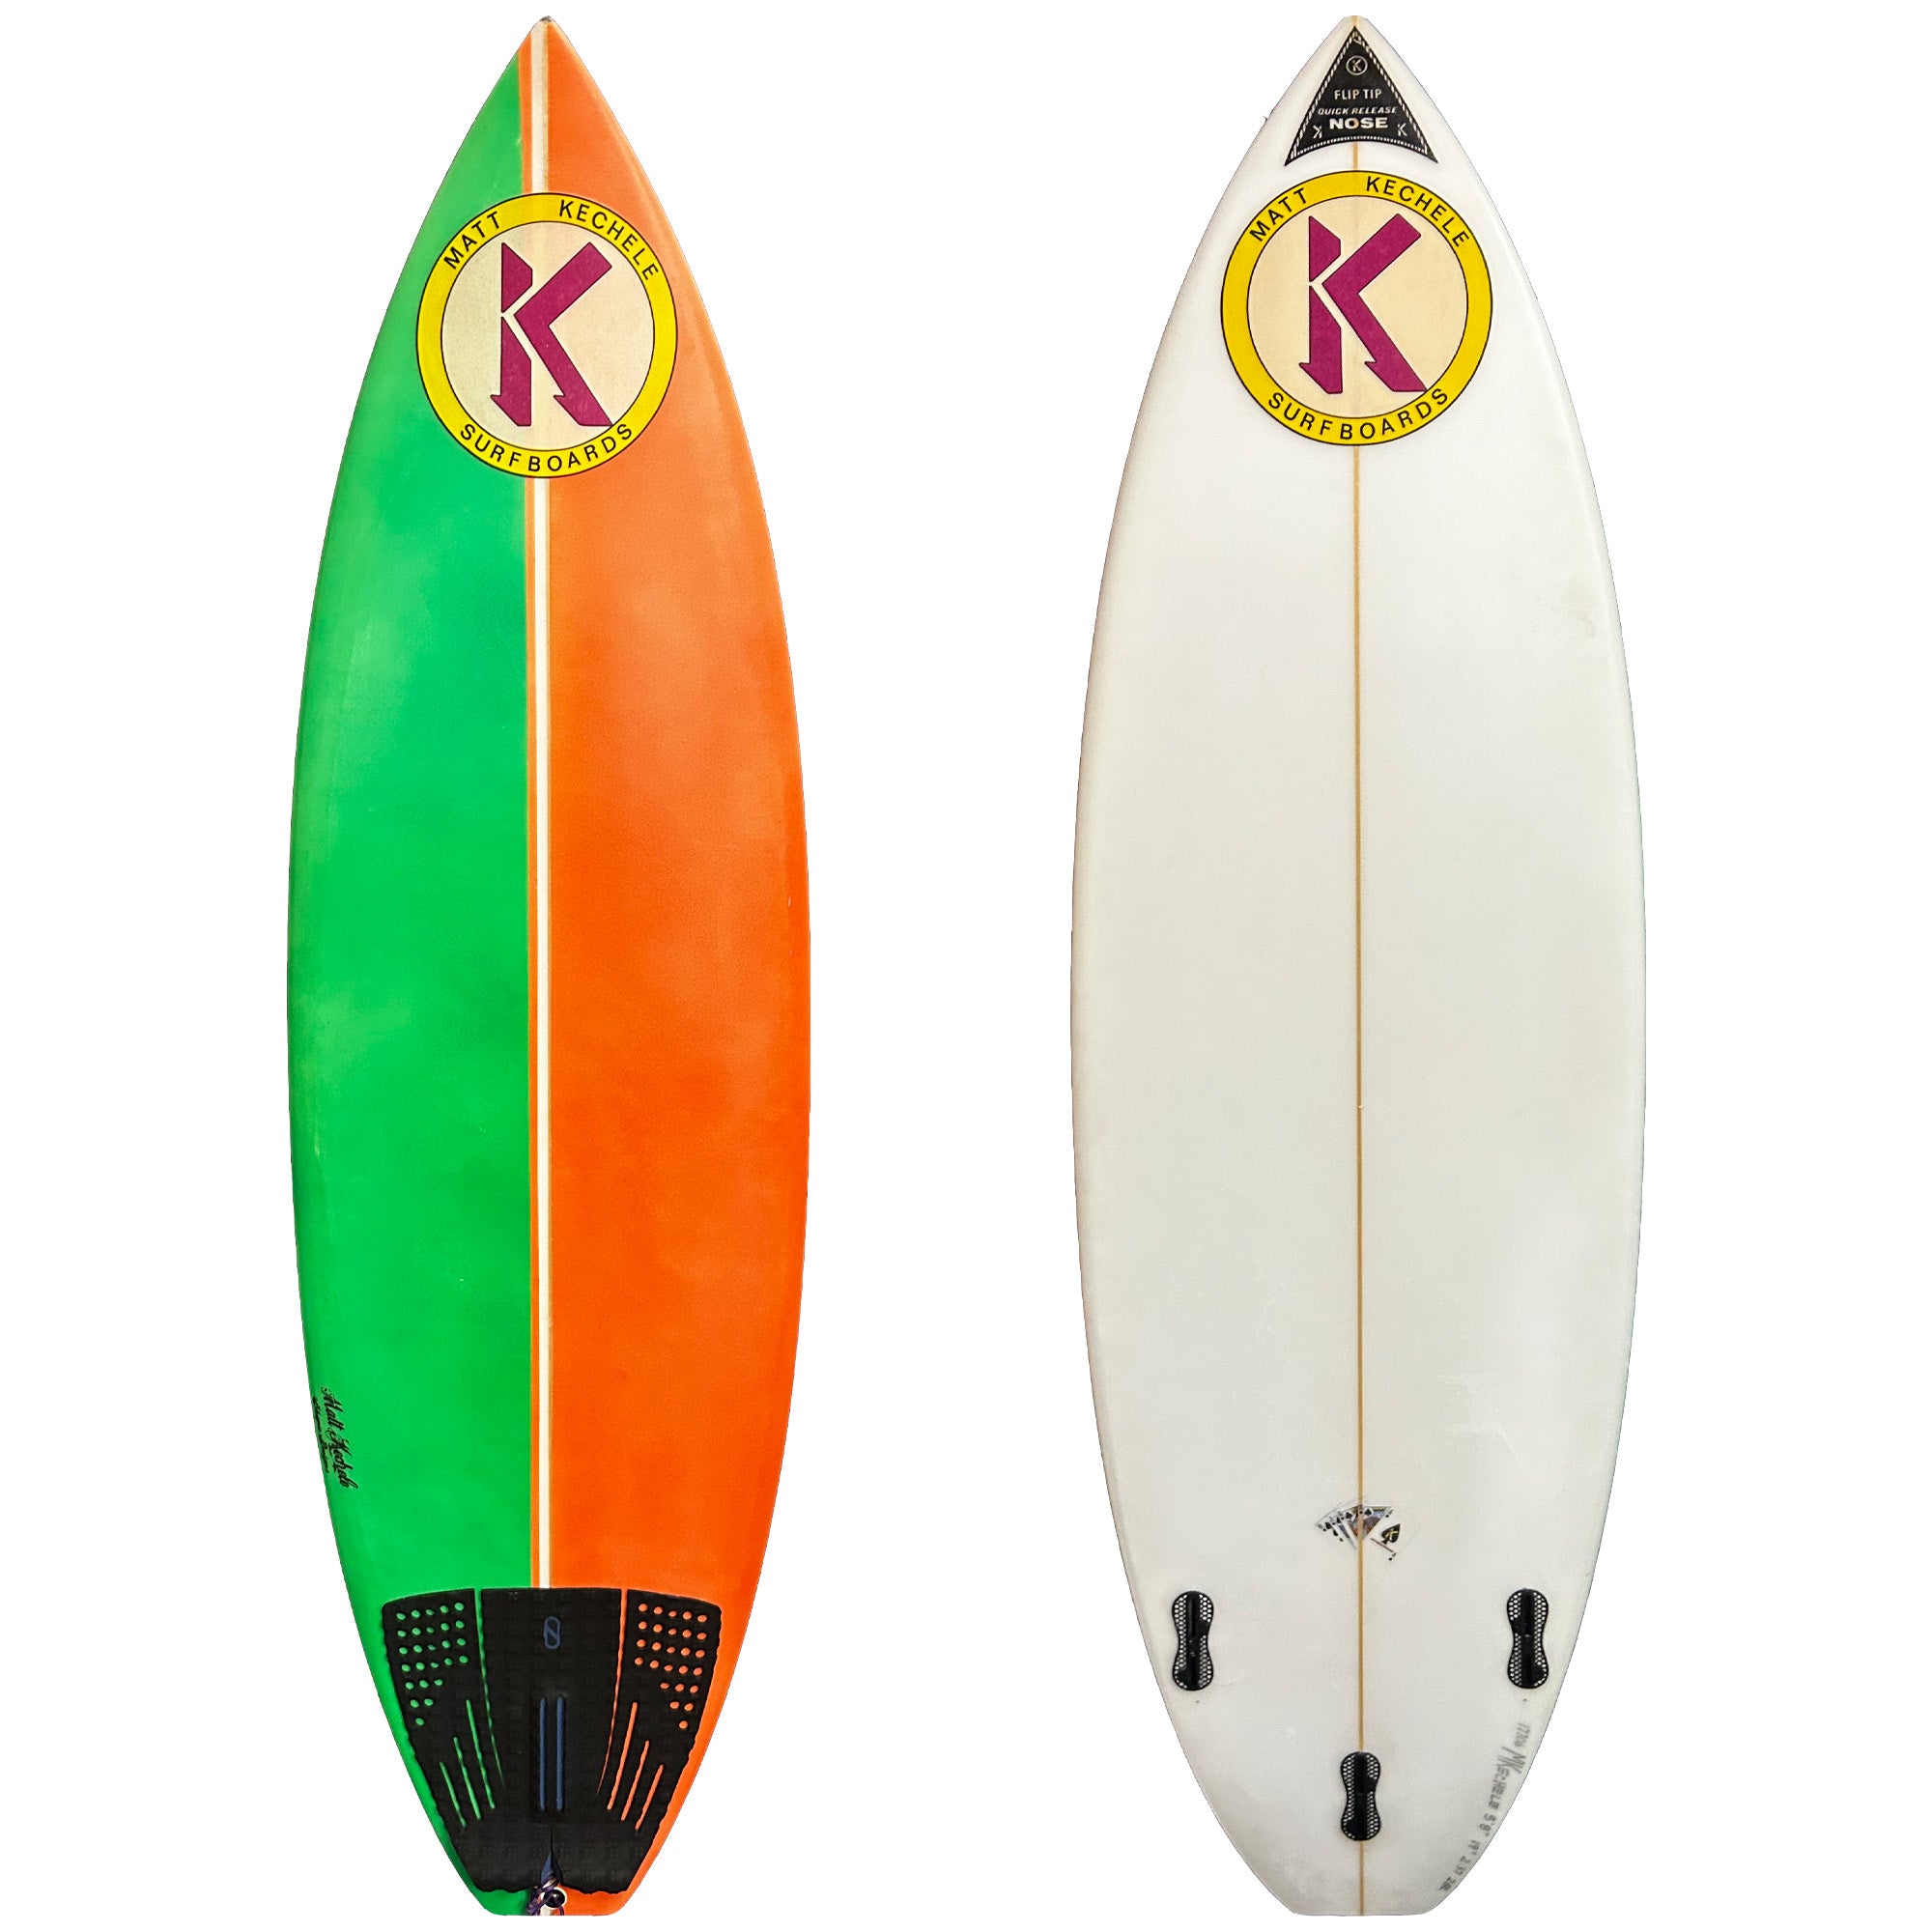 Kechele 5'8 Consignment Surfboard